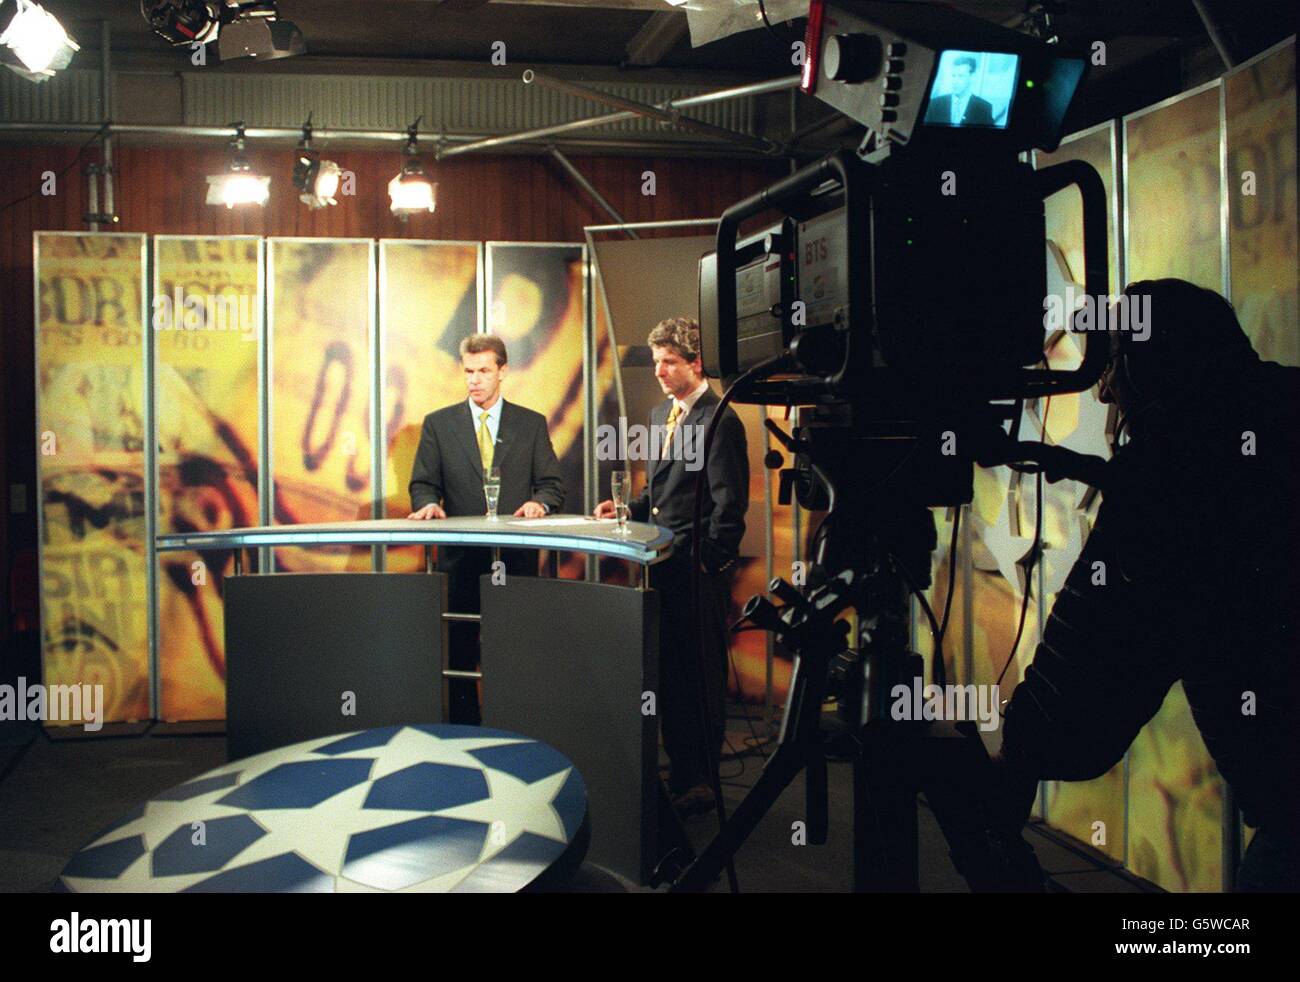 Borussia Dortmund v Juventus UEFA Champions League Soccer. Media Television  Interview Stock Photo - Alamy